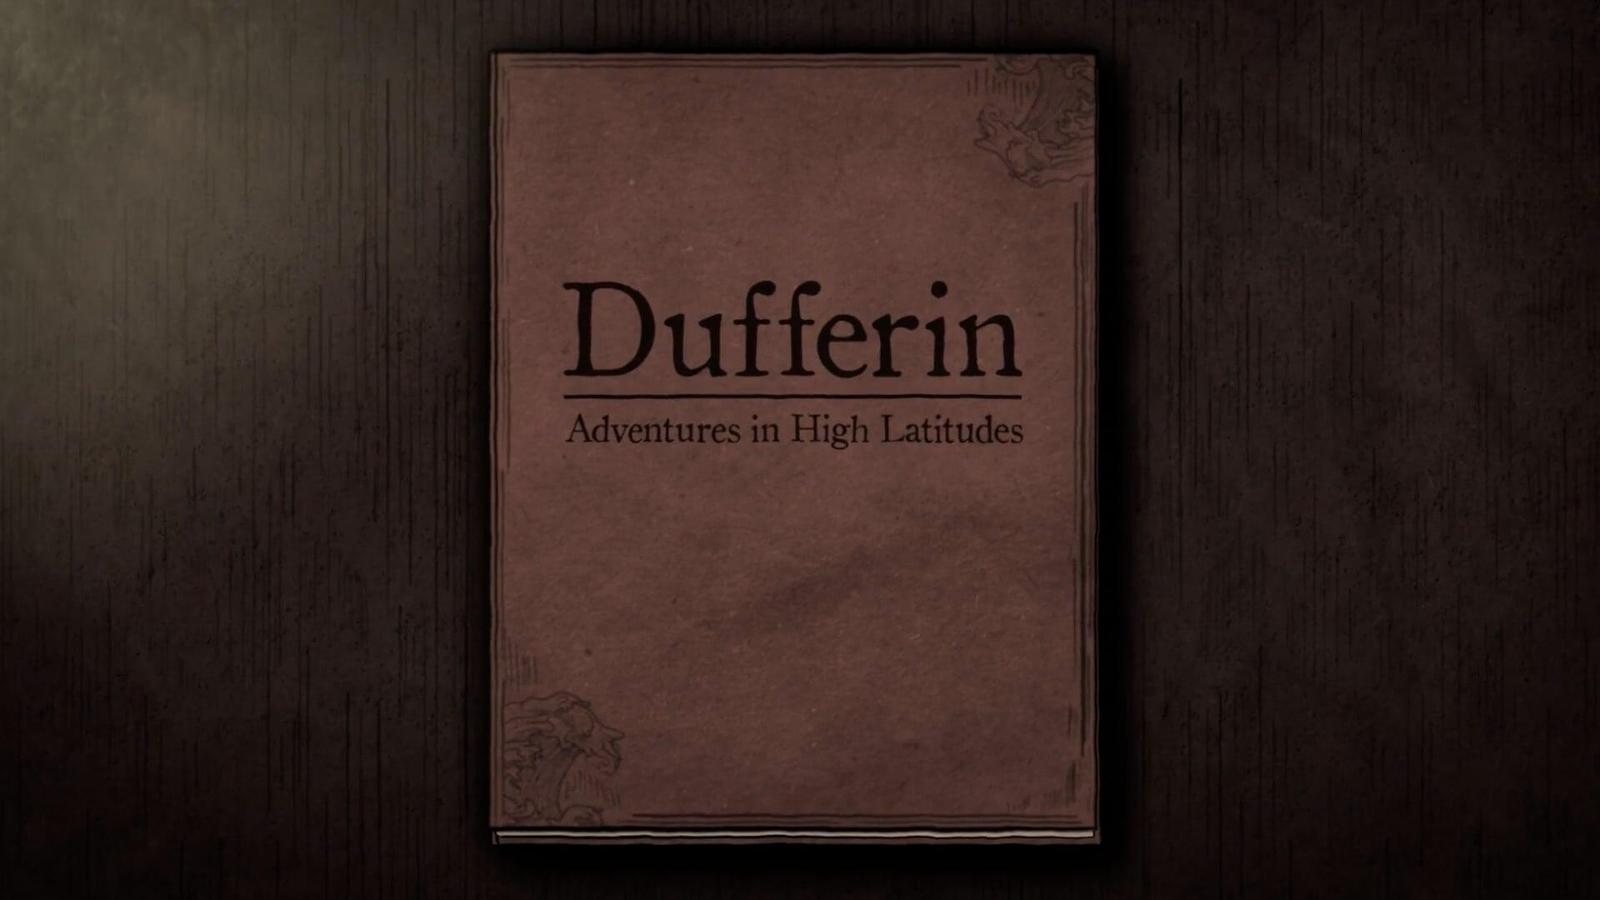 Dufferin: Adventures in High Latitudes